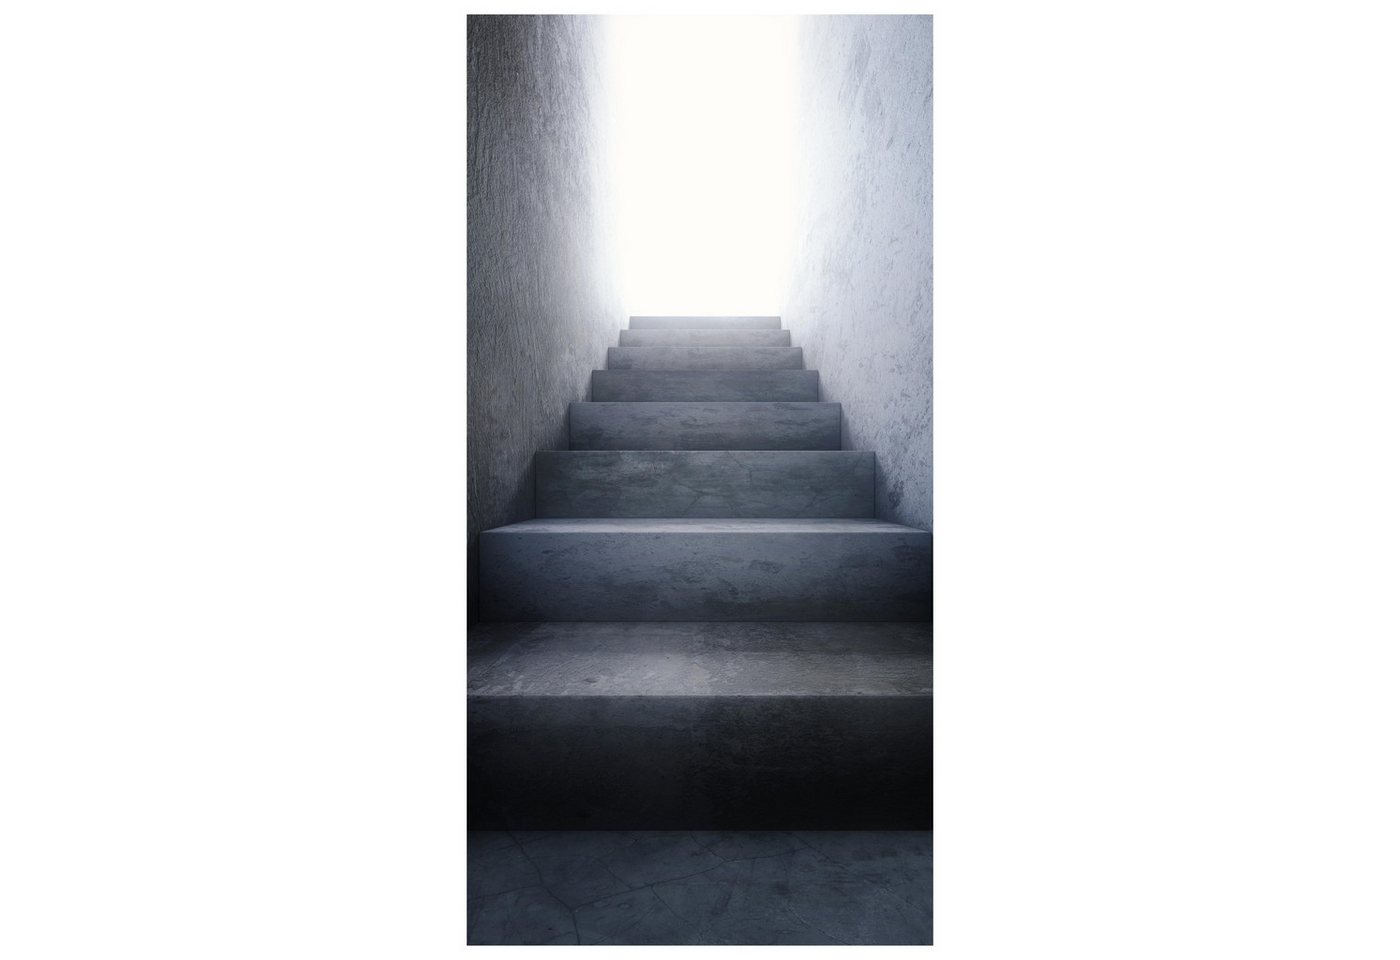 wandmotiv24 Türtapete Dunkle Treppe ins Licht, Treppen-stufen, glatt, Fototapete, Wandtapete, Motivtapete, matt, selbstklebende Vliestapete von wandmotiv24